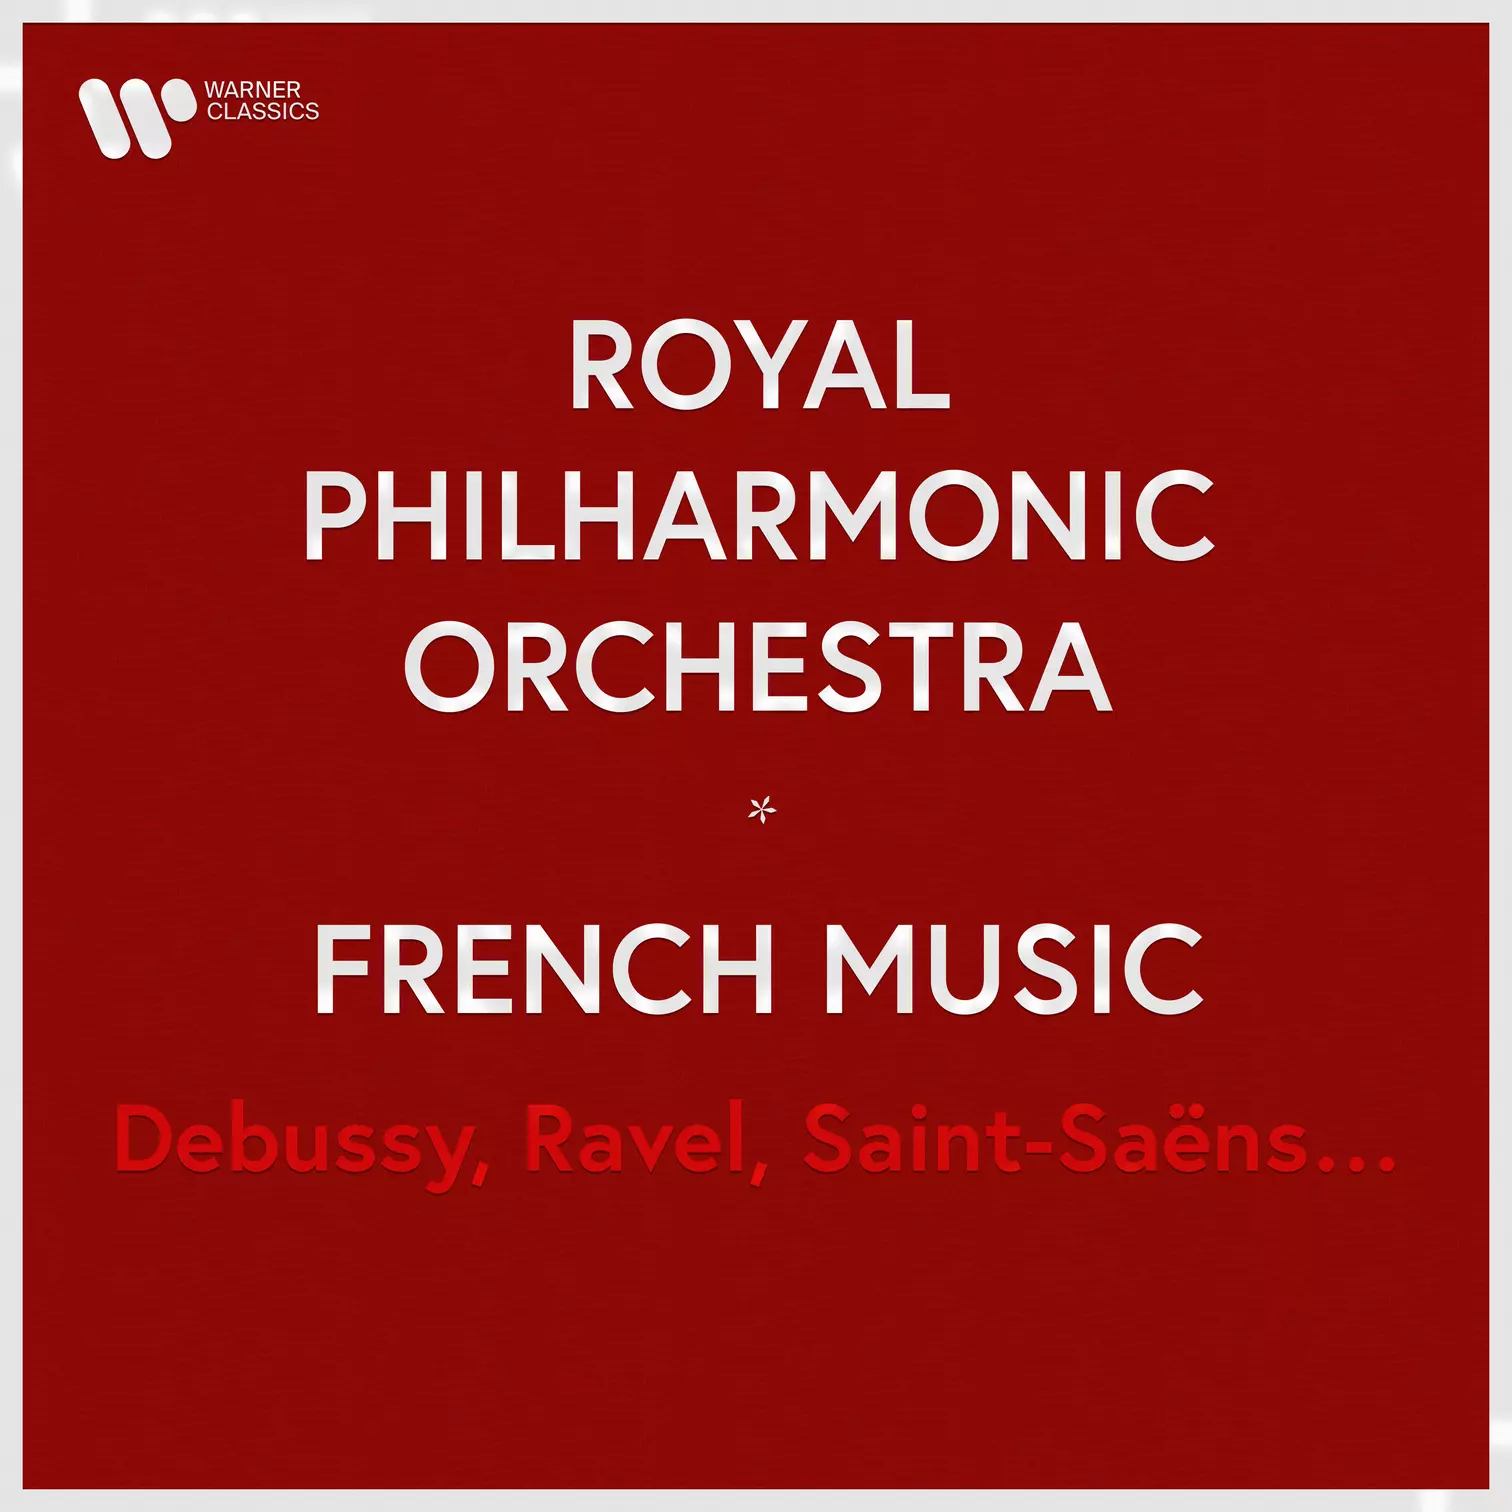 Royal Philharmonic Orchestra - French Music. Debussy, Ravel, Saint-Saëns…